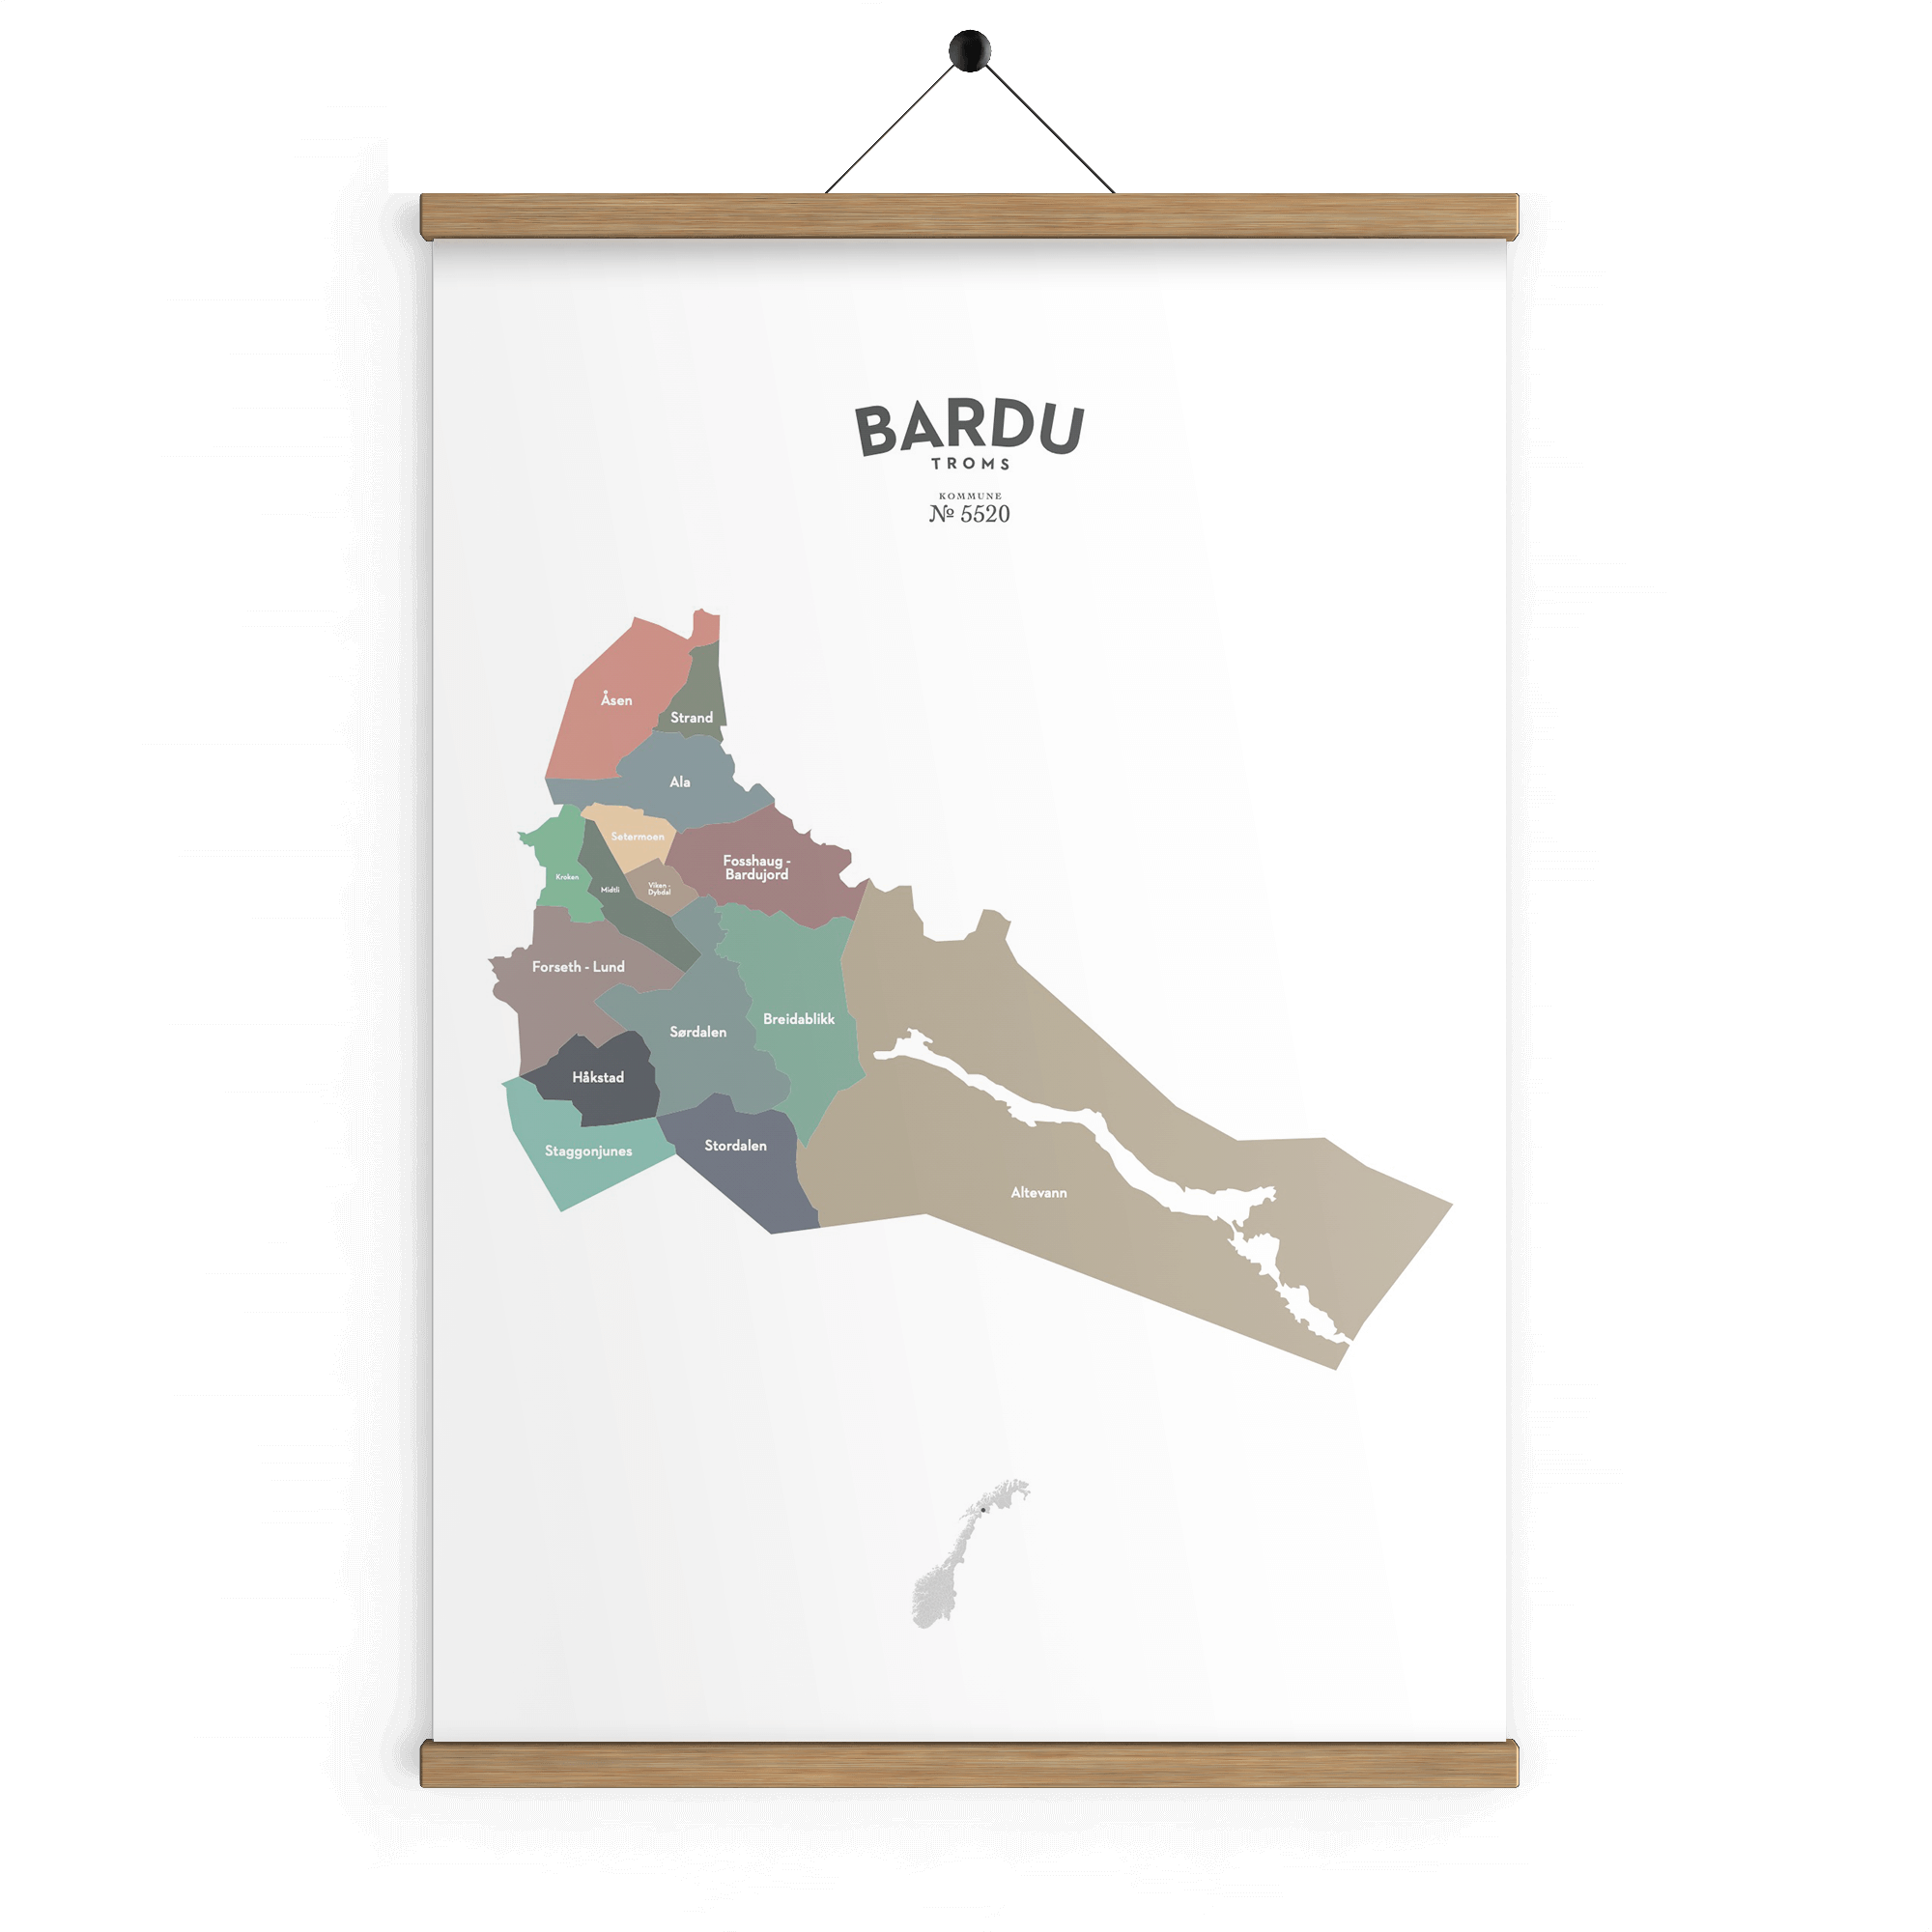 Bardu